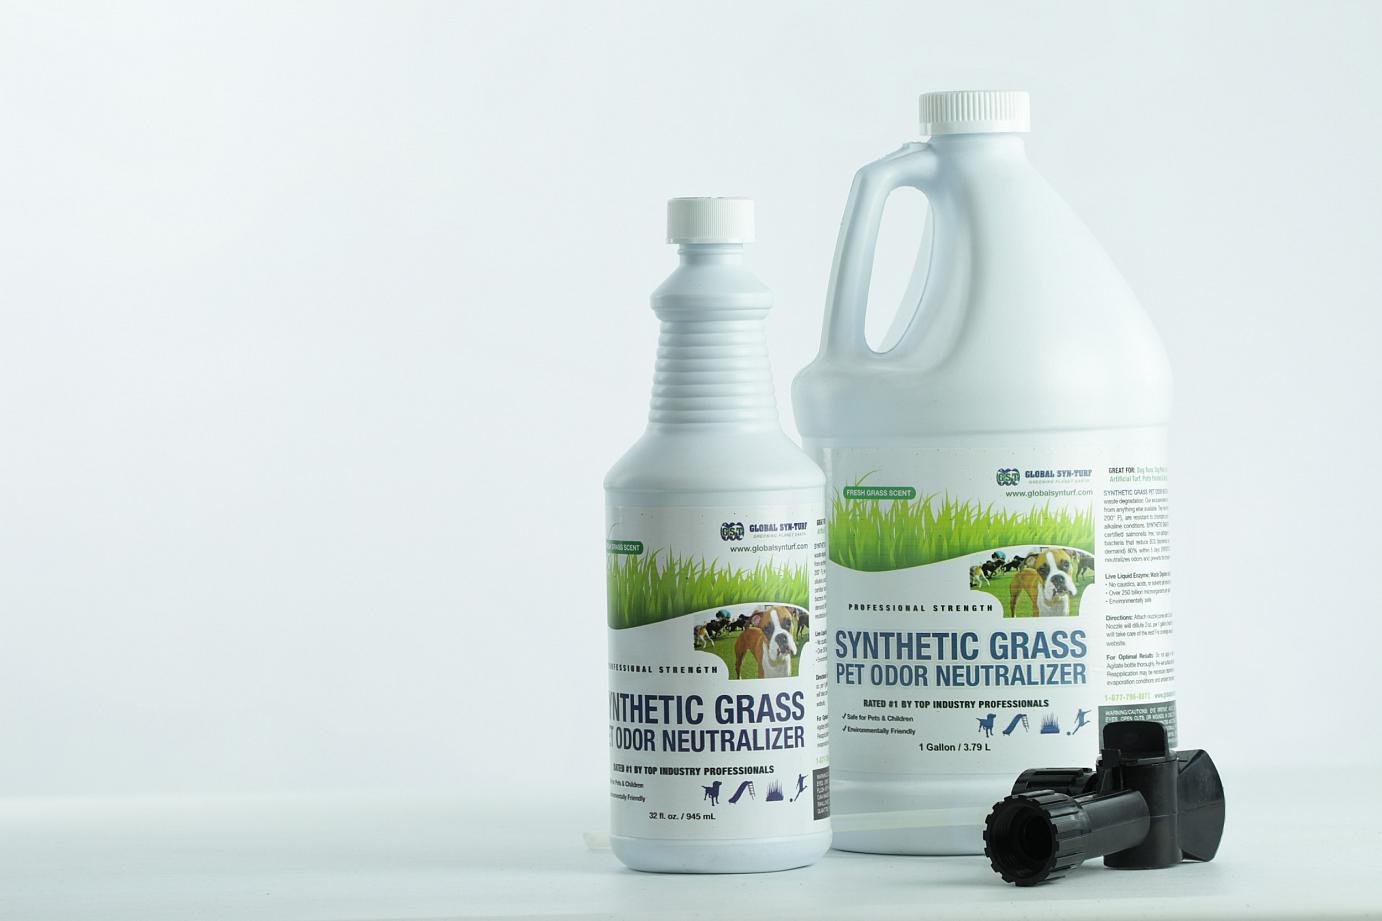 Pet Odor Neutralizer Synthetic Grass Garden Tool New York